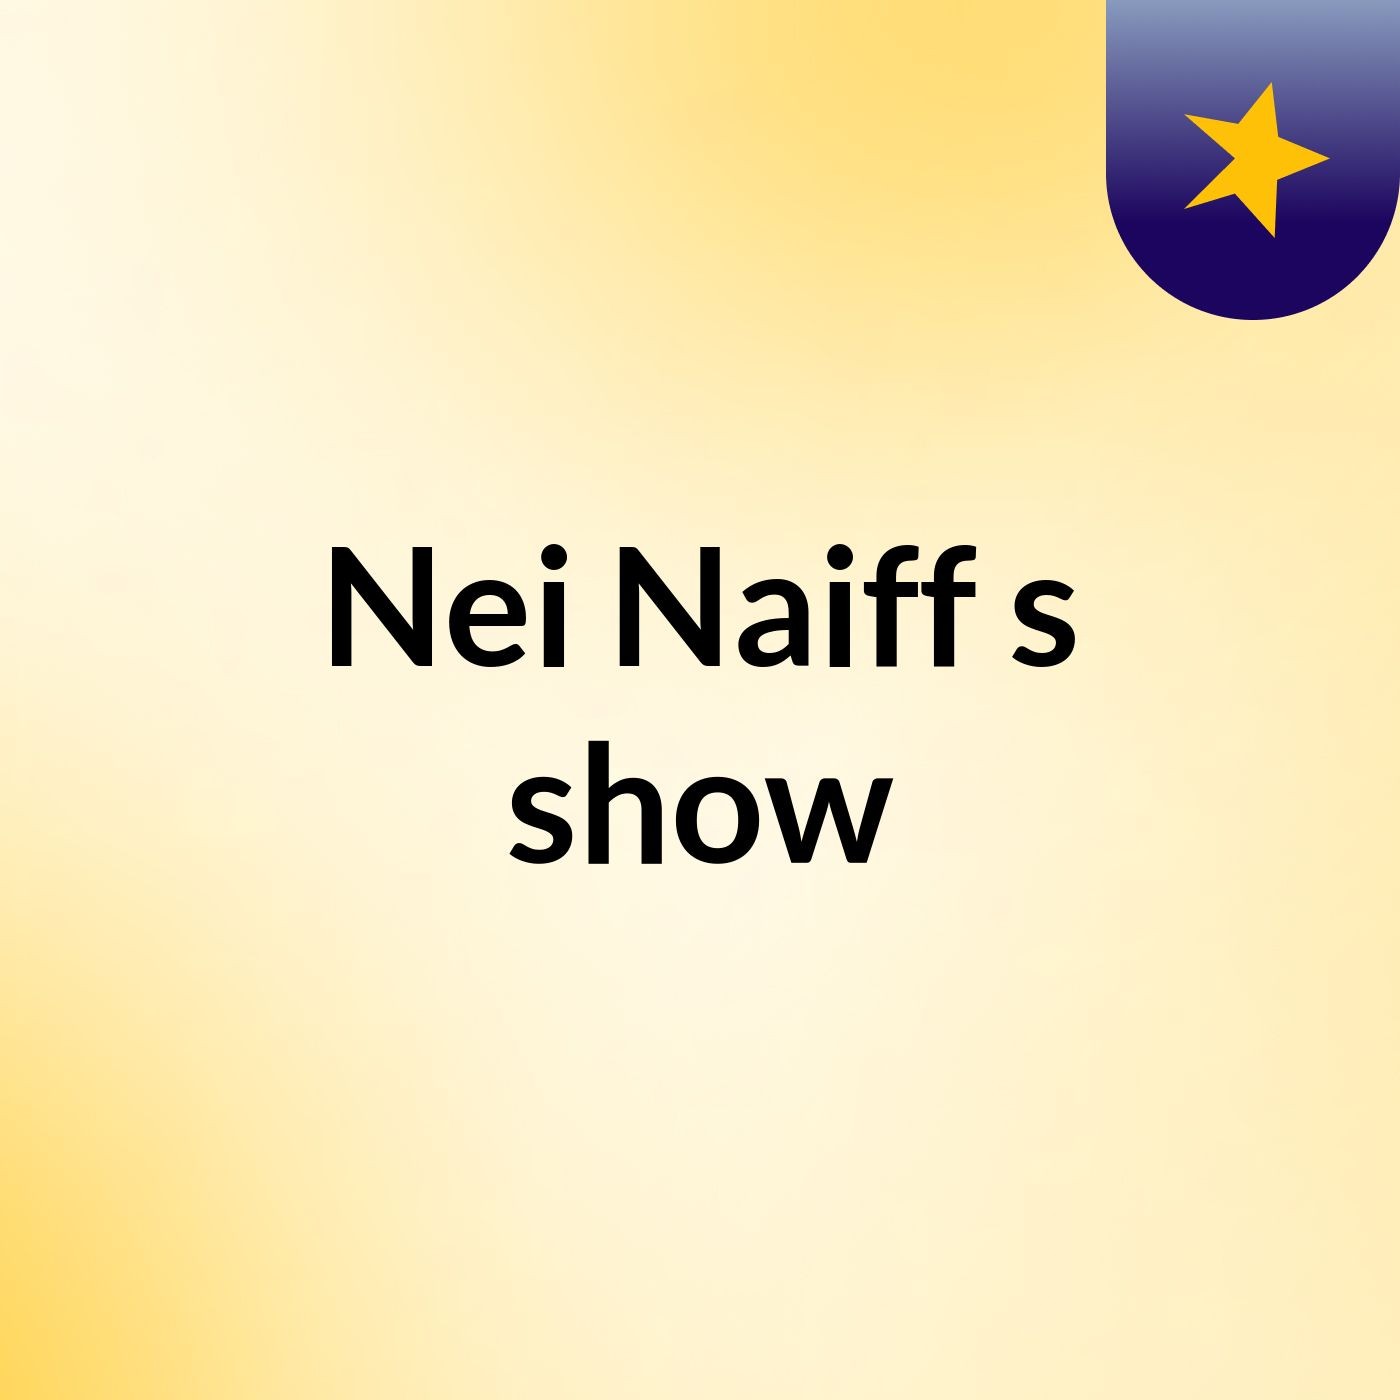 Nei Naiff's show